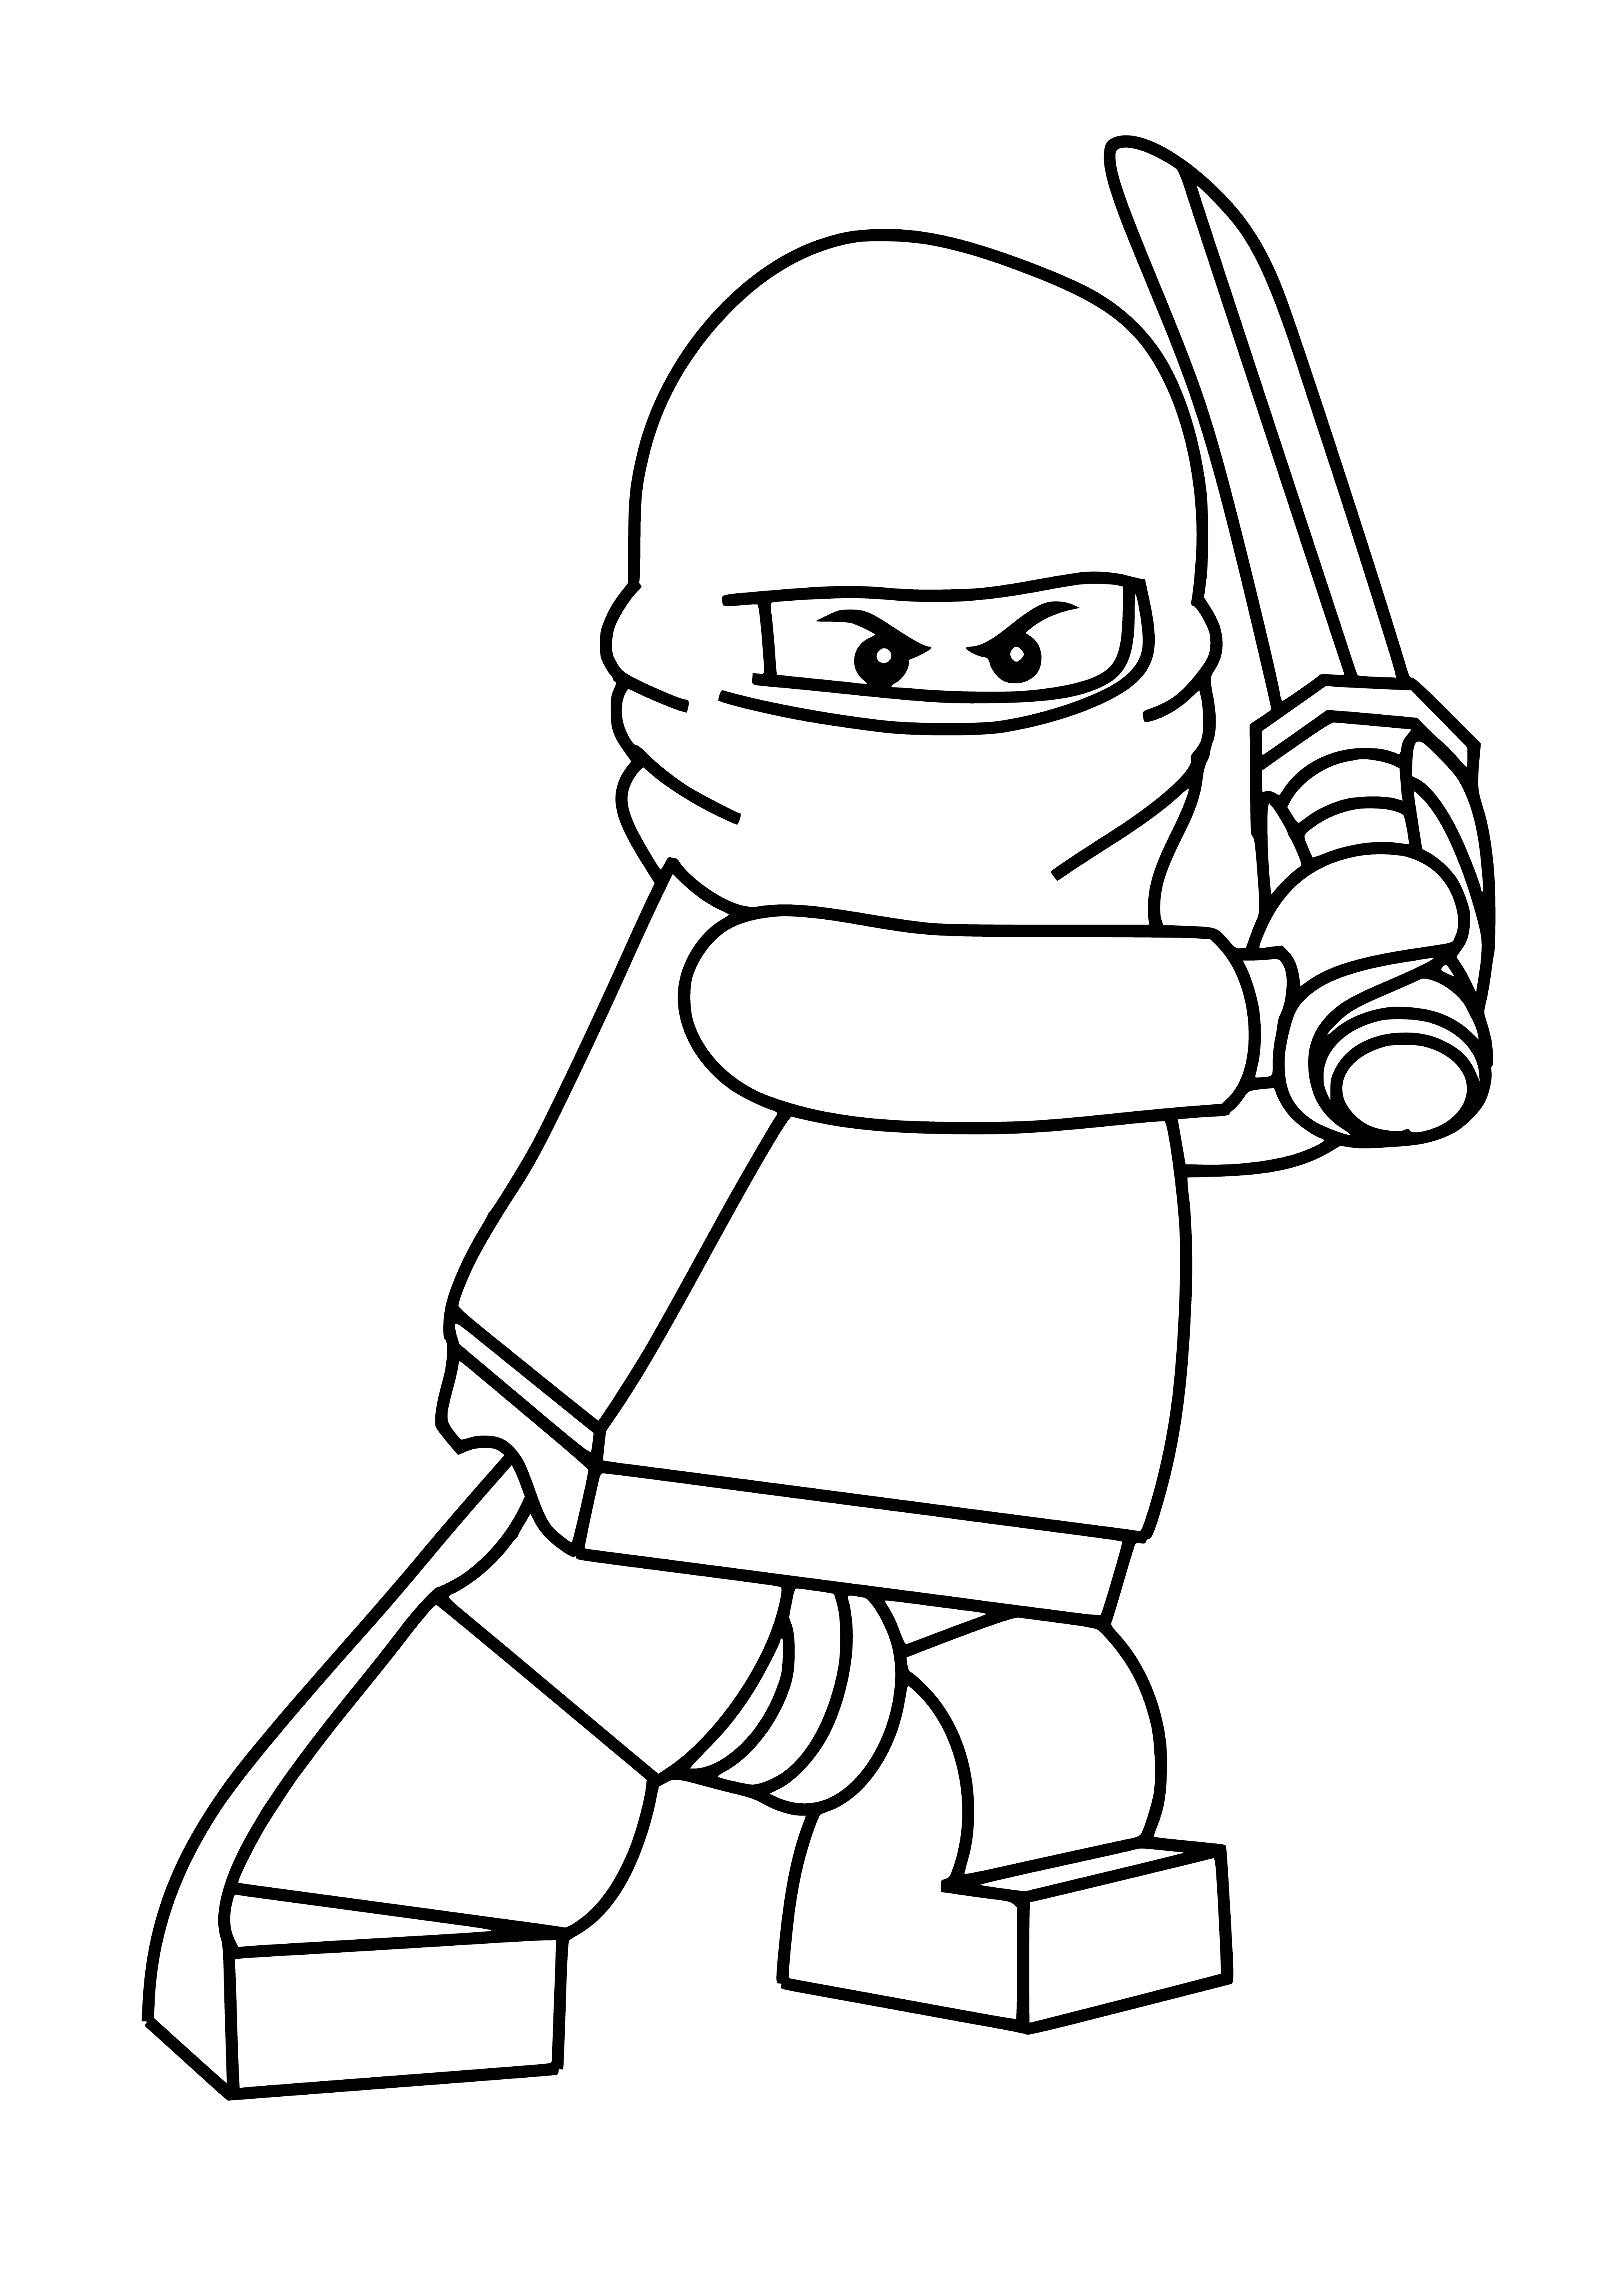 Ninja coloring page